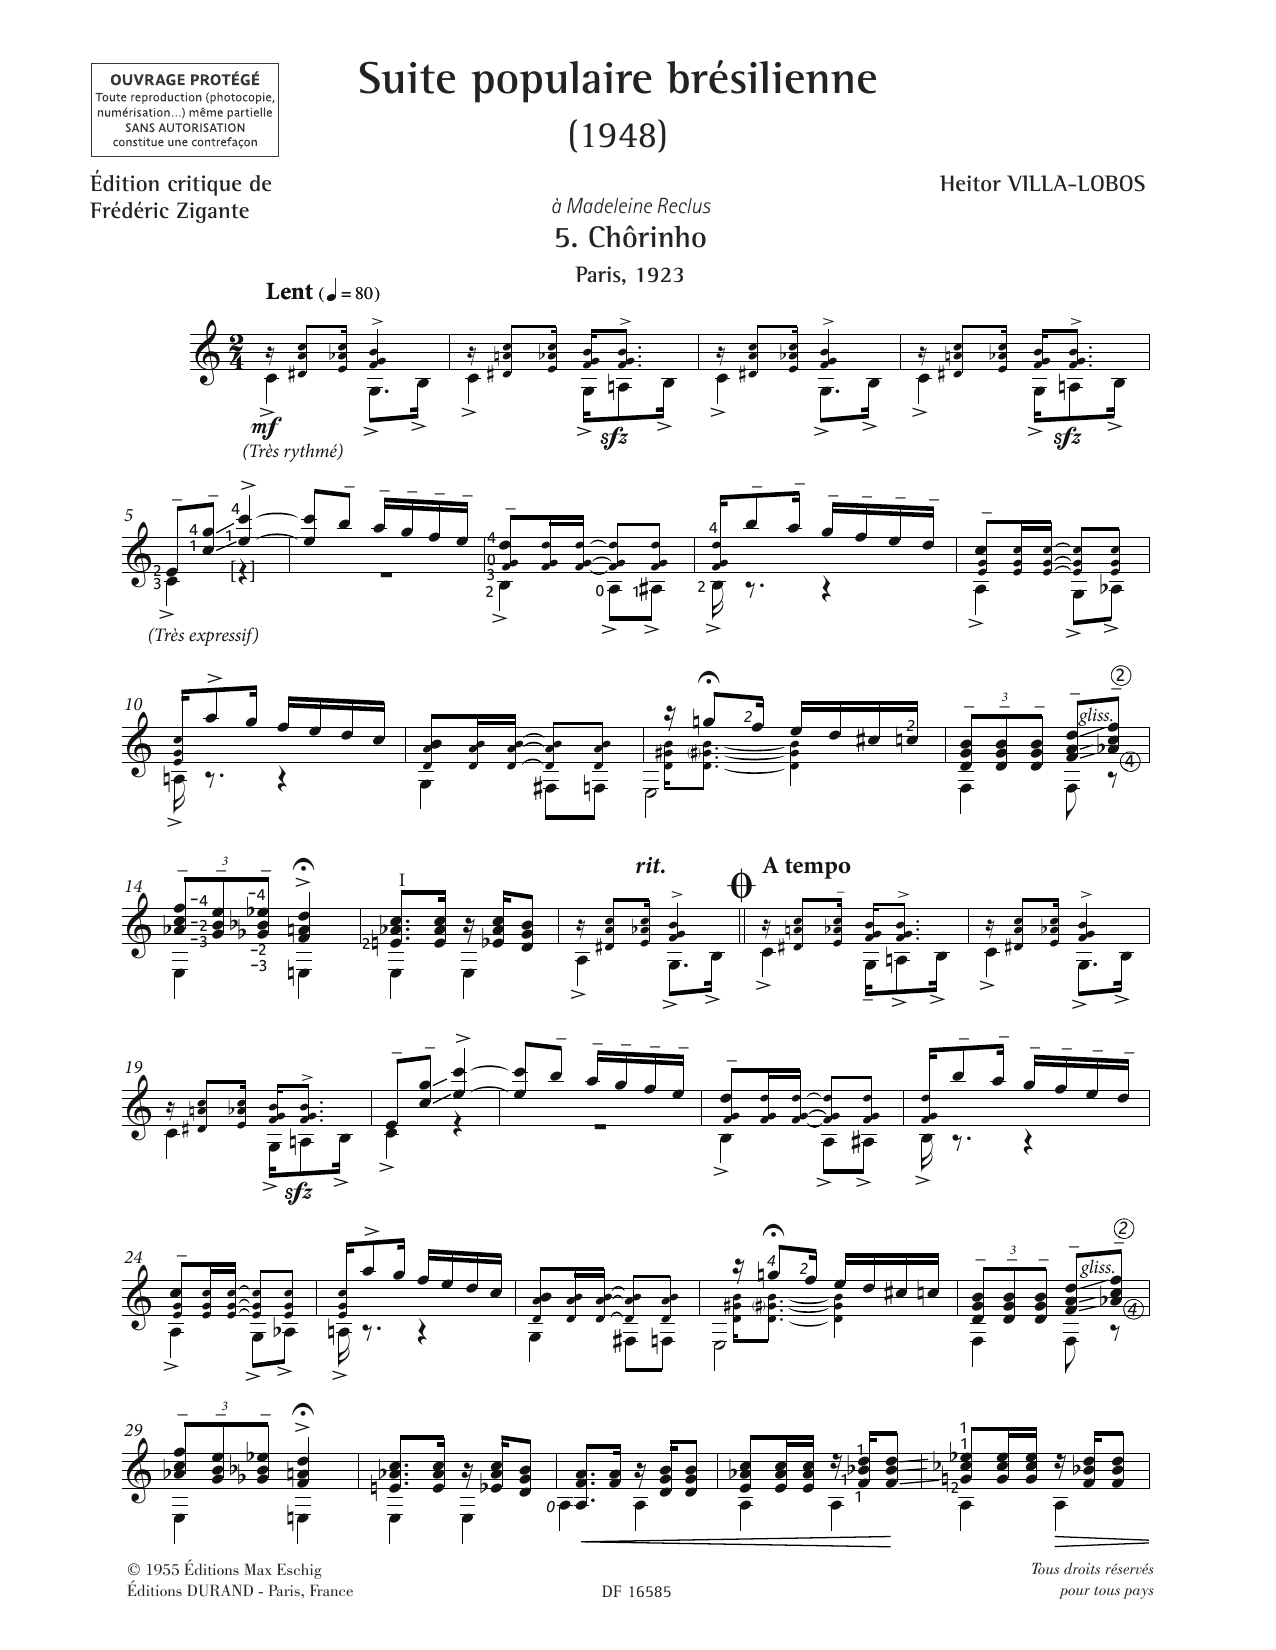 Heitor Villa-Lobos Chorinho Sheet Music Notes & Chords for Solo Guitar - Download or Print PDF